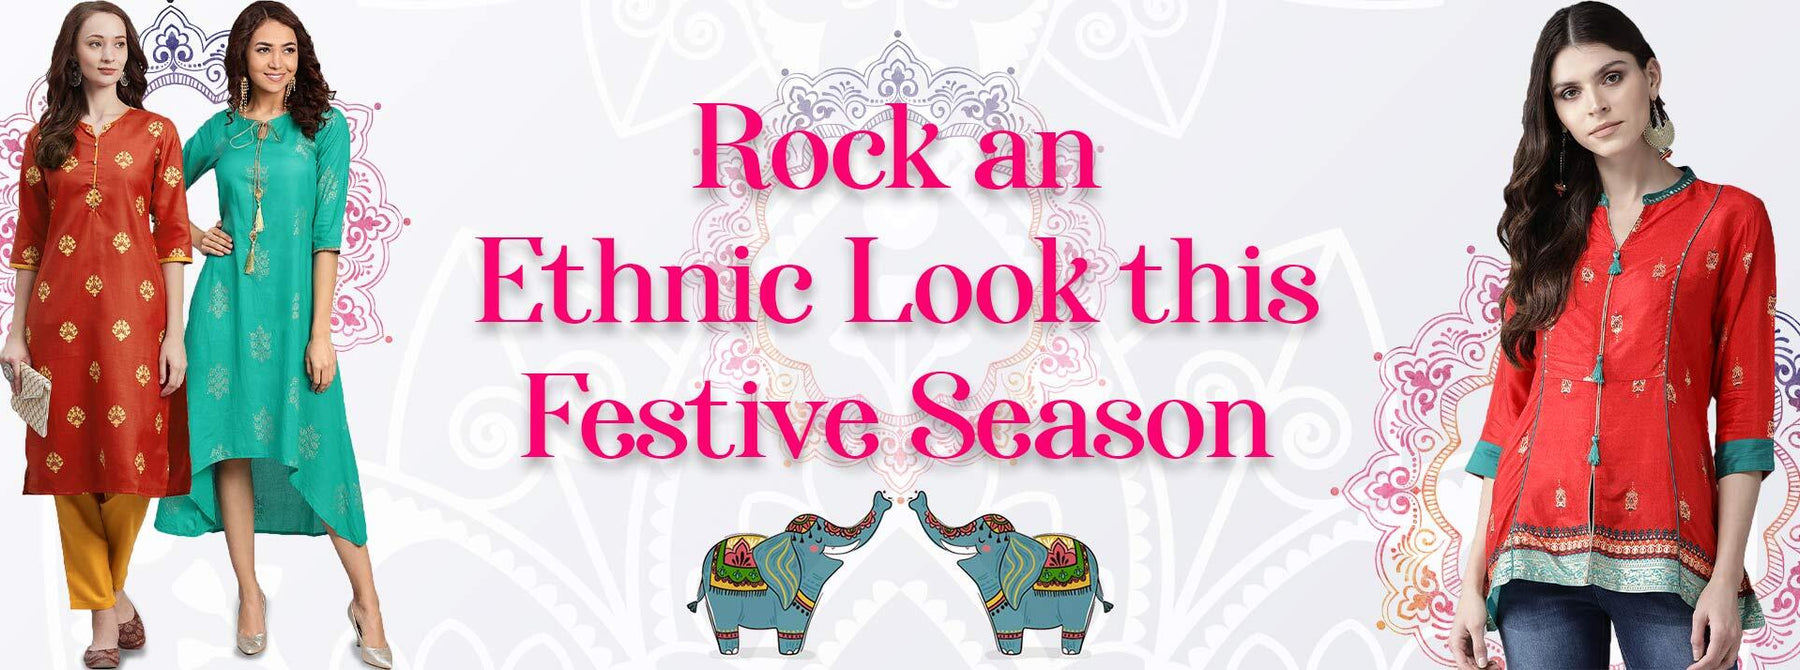 Rock an Ethnic Look this Festive Season